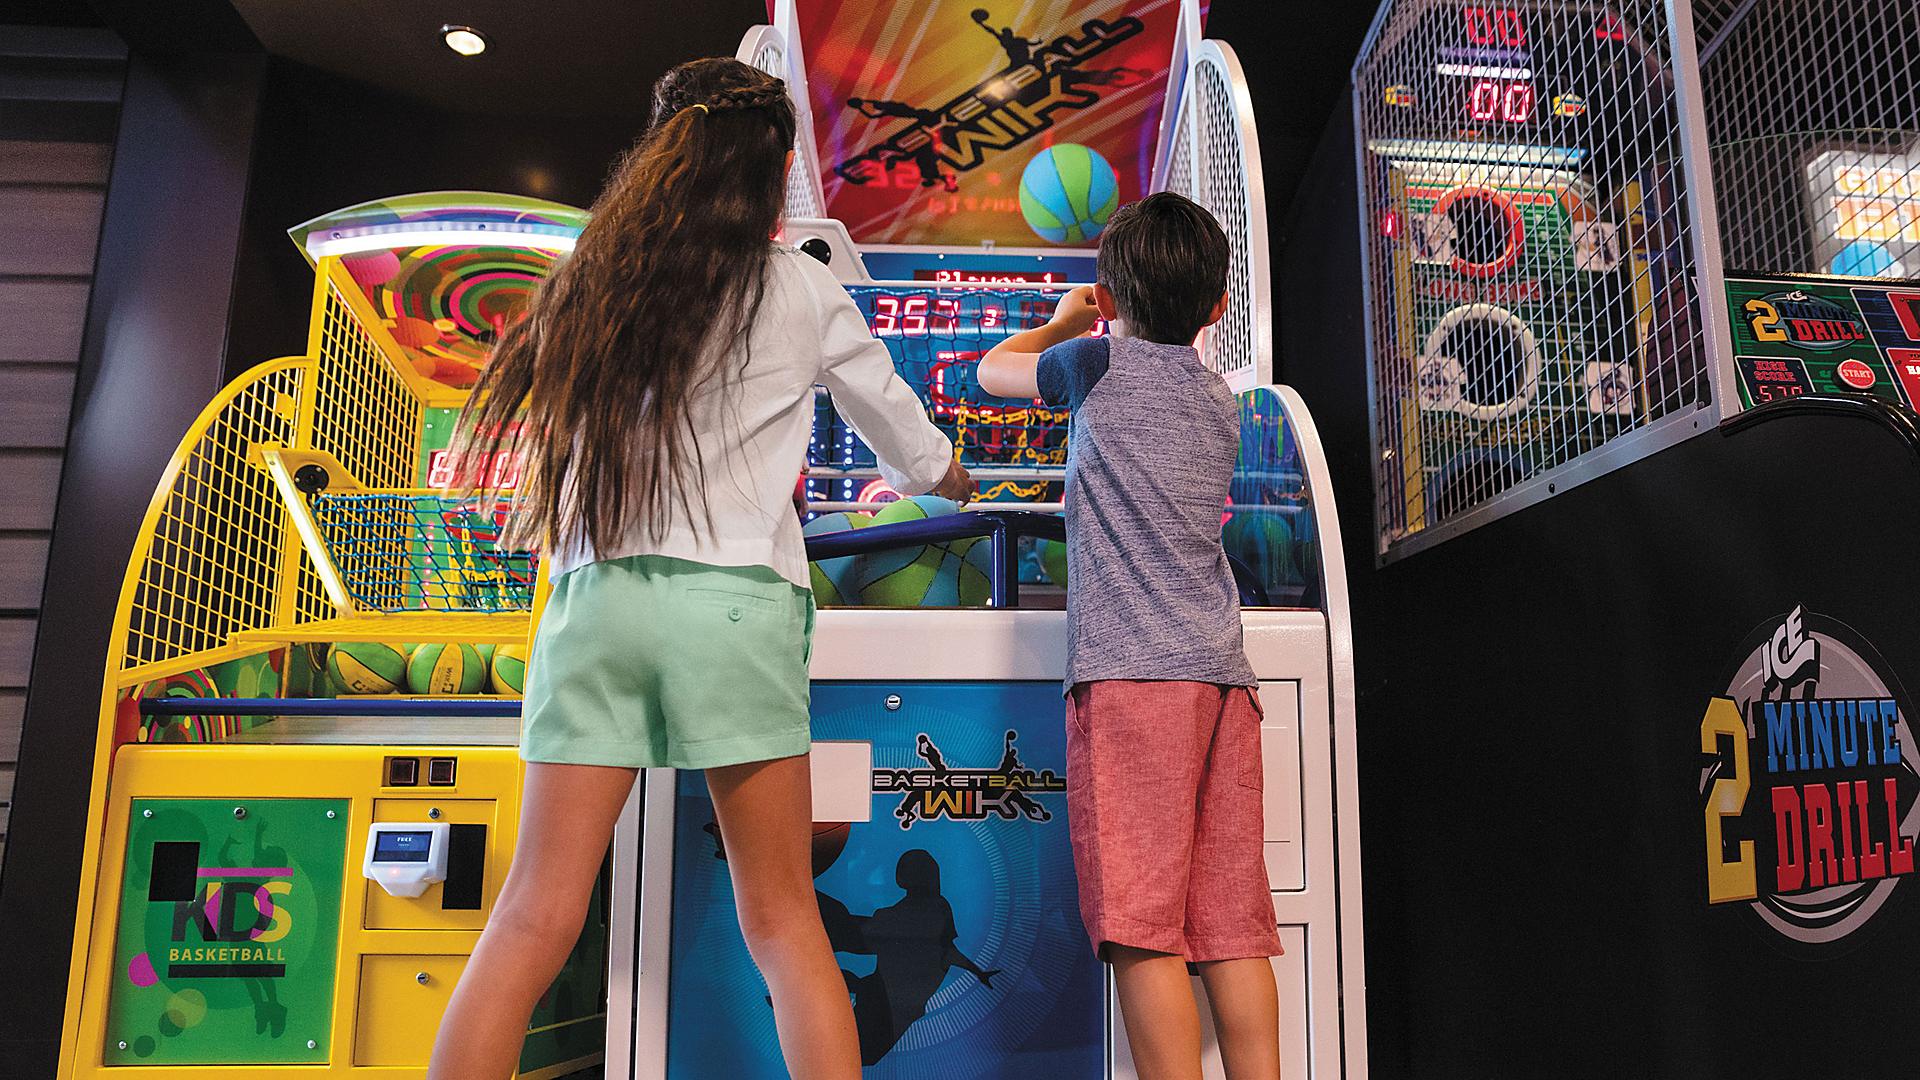 arcade-kids-playing-basketball